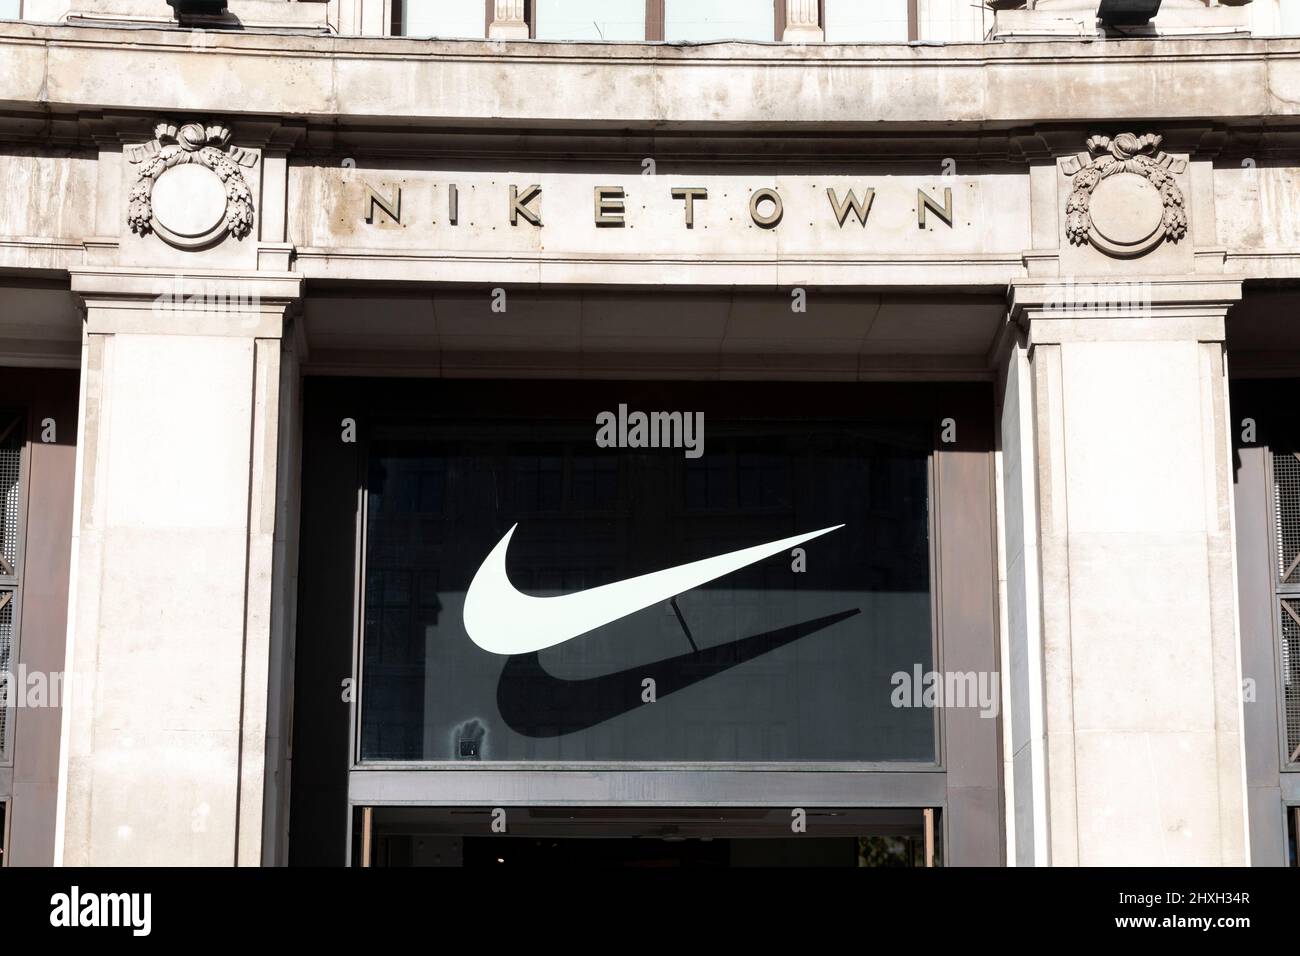 Vista general de la tienda Nike en Oxford Street, West End London.  Copyright Belinda Jiao jiao.bilin@gmail.com 07598931257  https://www.belindajiao.com/abo Fotografía de stock - Alamy